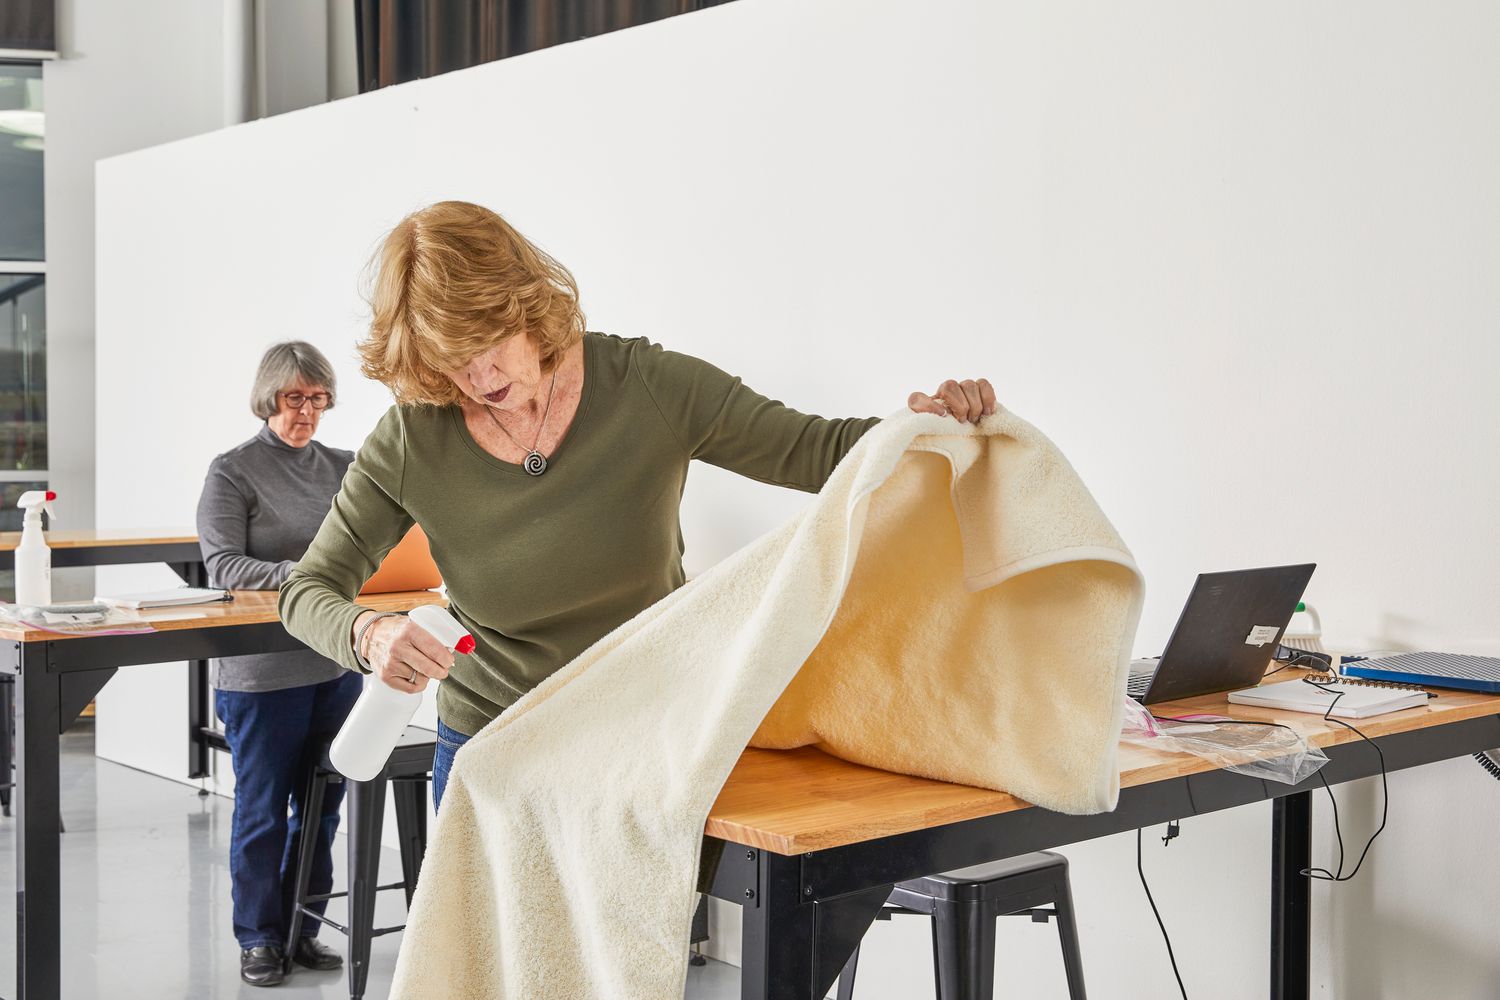 Woman spraying Italic Serene Ultraplush Australian Cotton Towels during testing